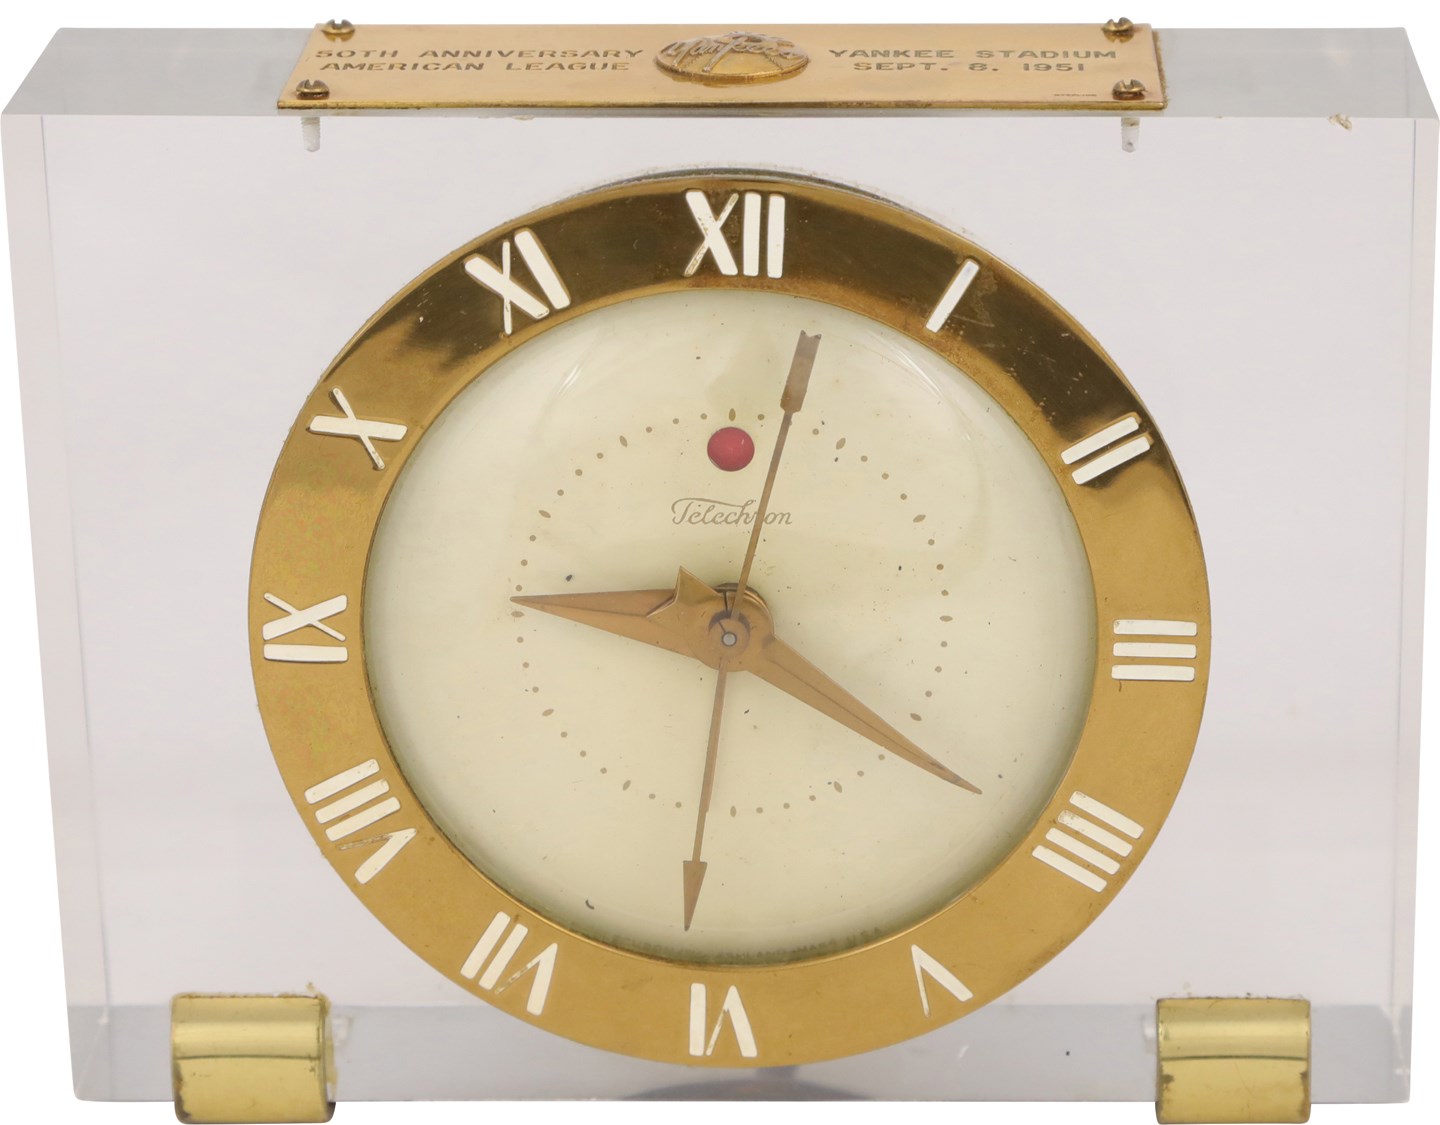 - 1951 Yankee Stadium 50th Anniversary of the American League Presentational Clock